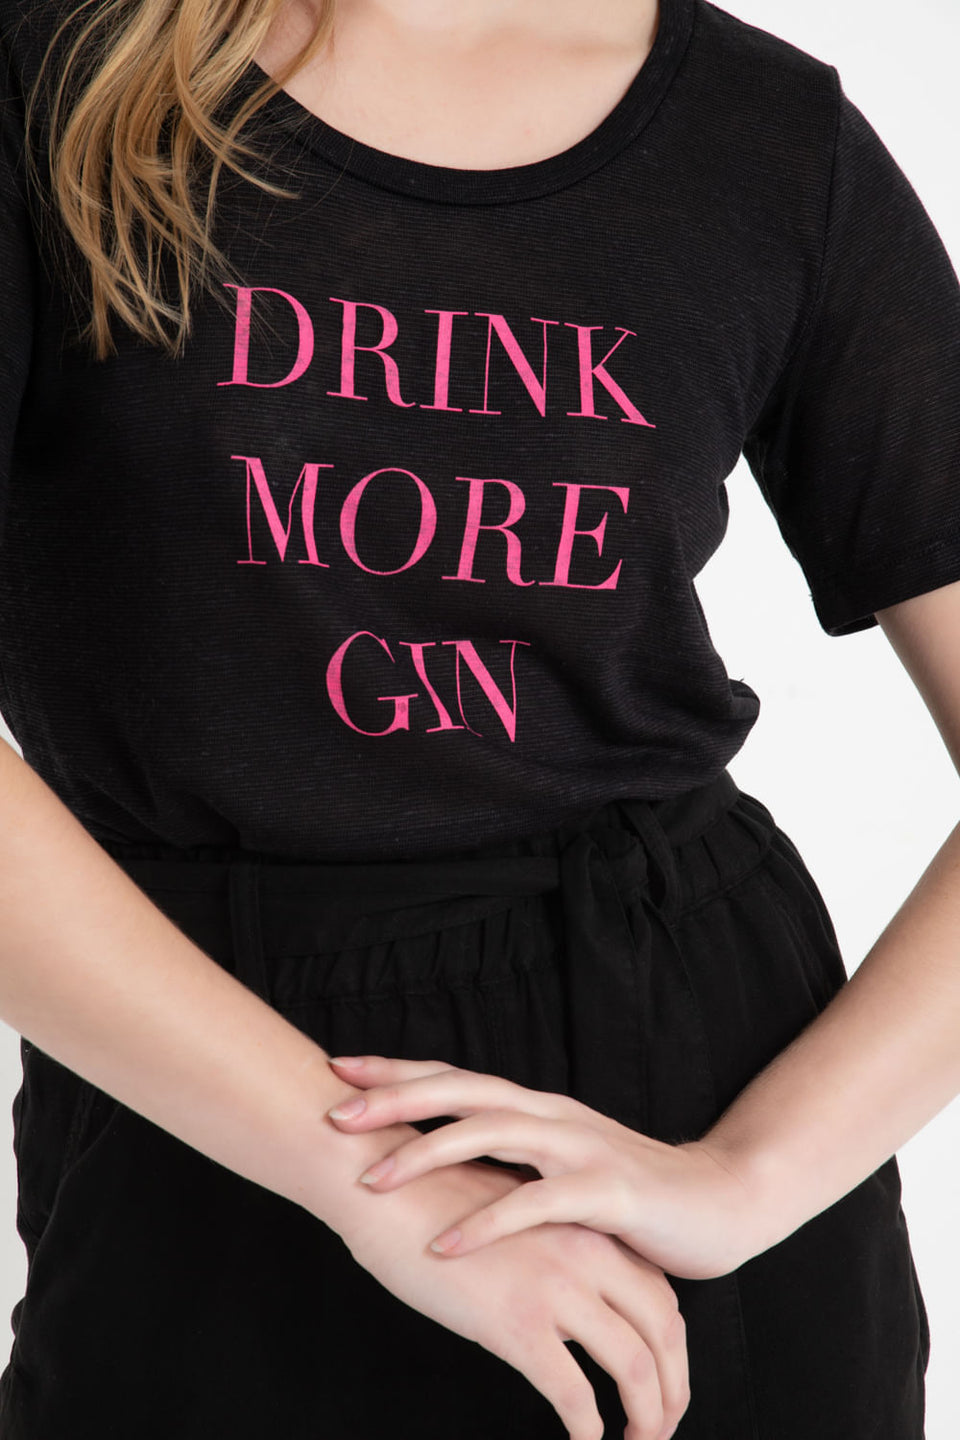 Camiseta Drink More Gin Preto